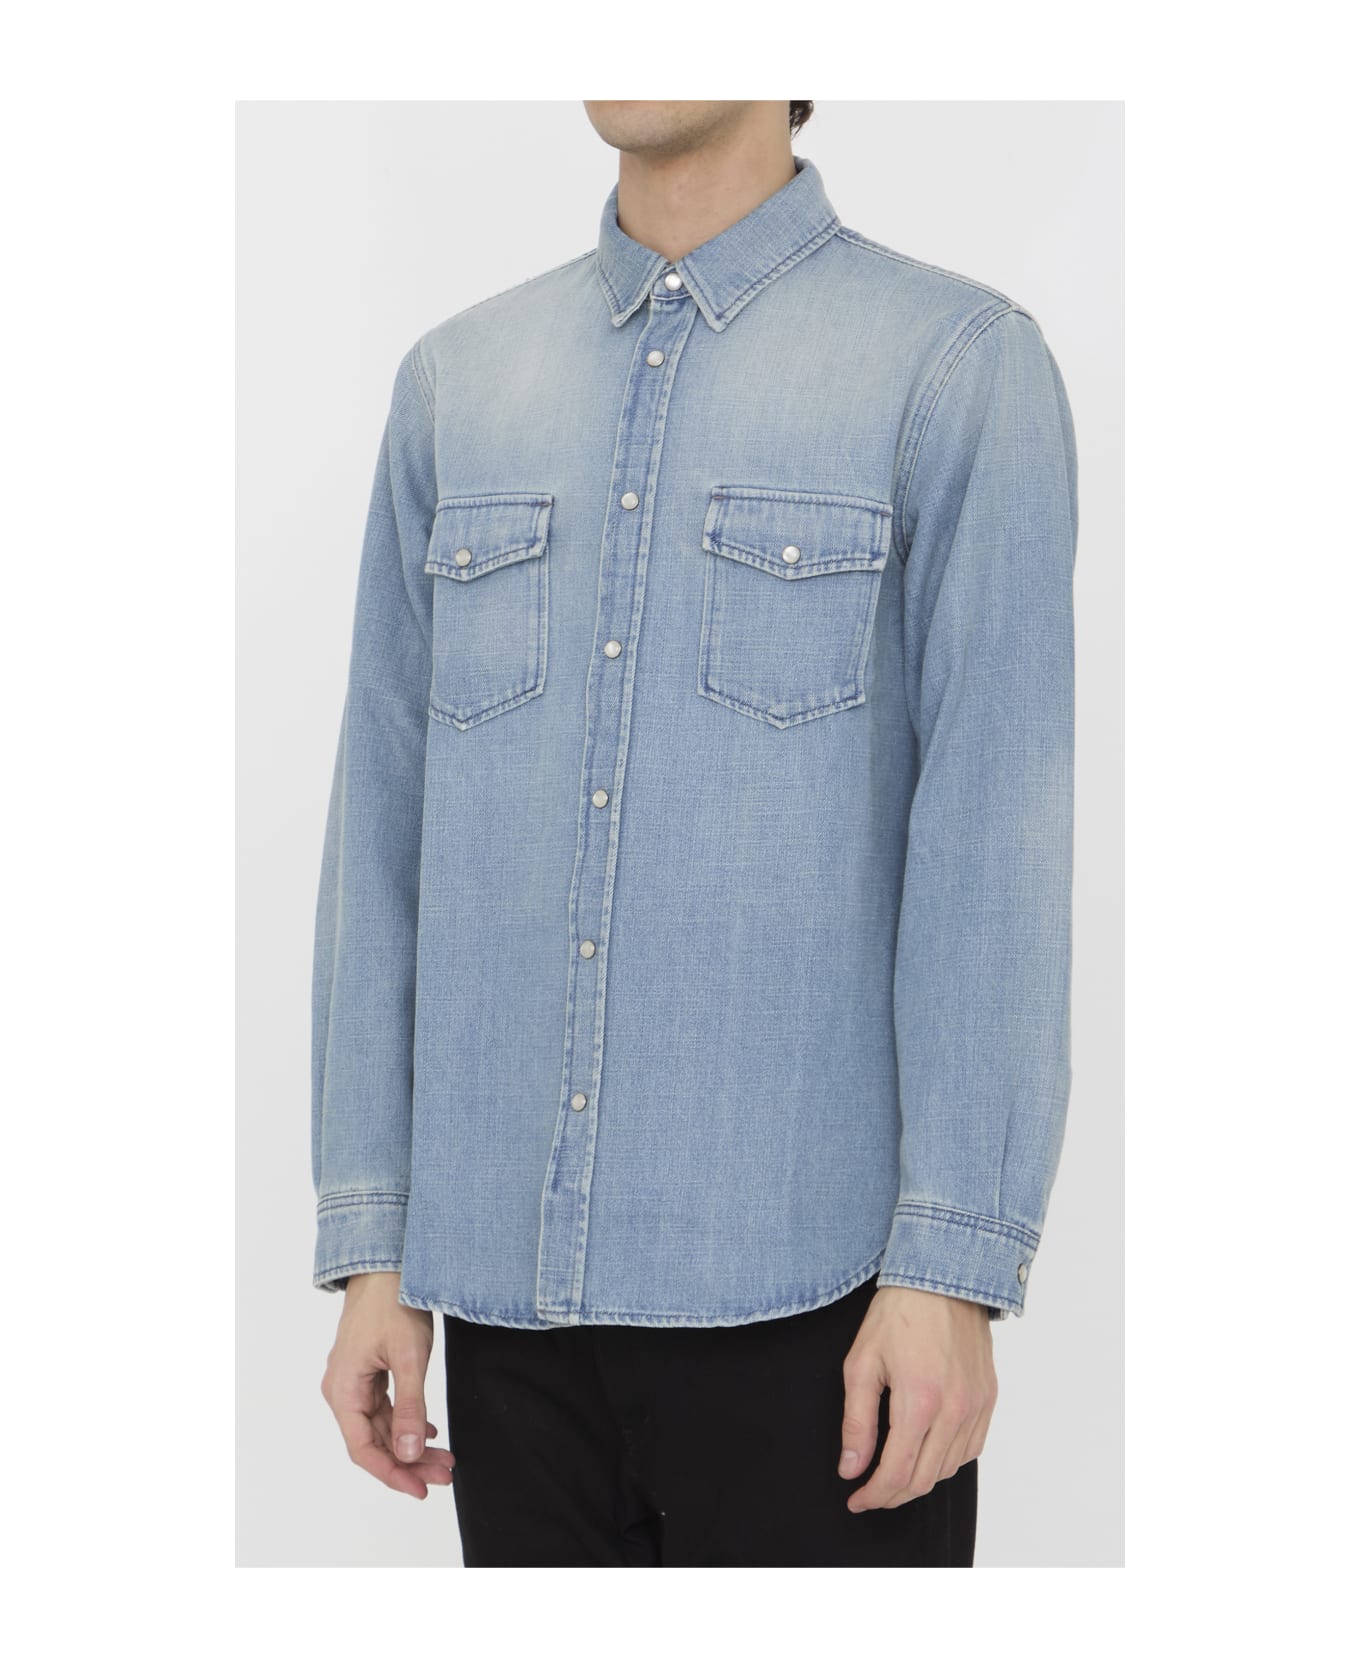 Saint Laurent Oversize Shirt - LIGHT JAPANESE BLUE